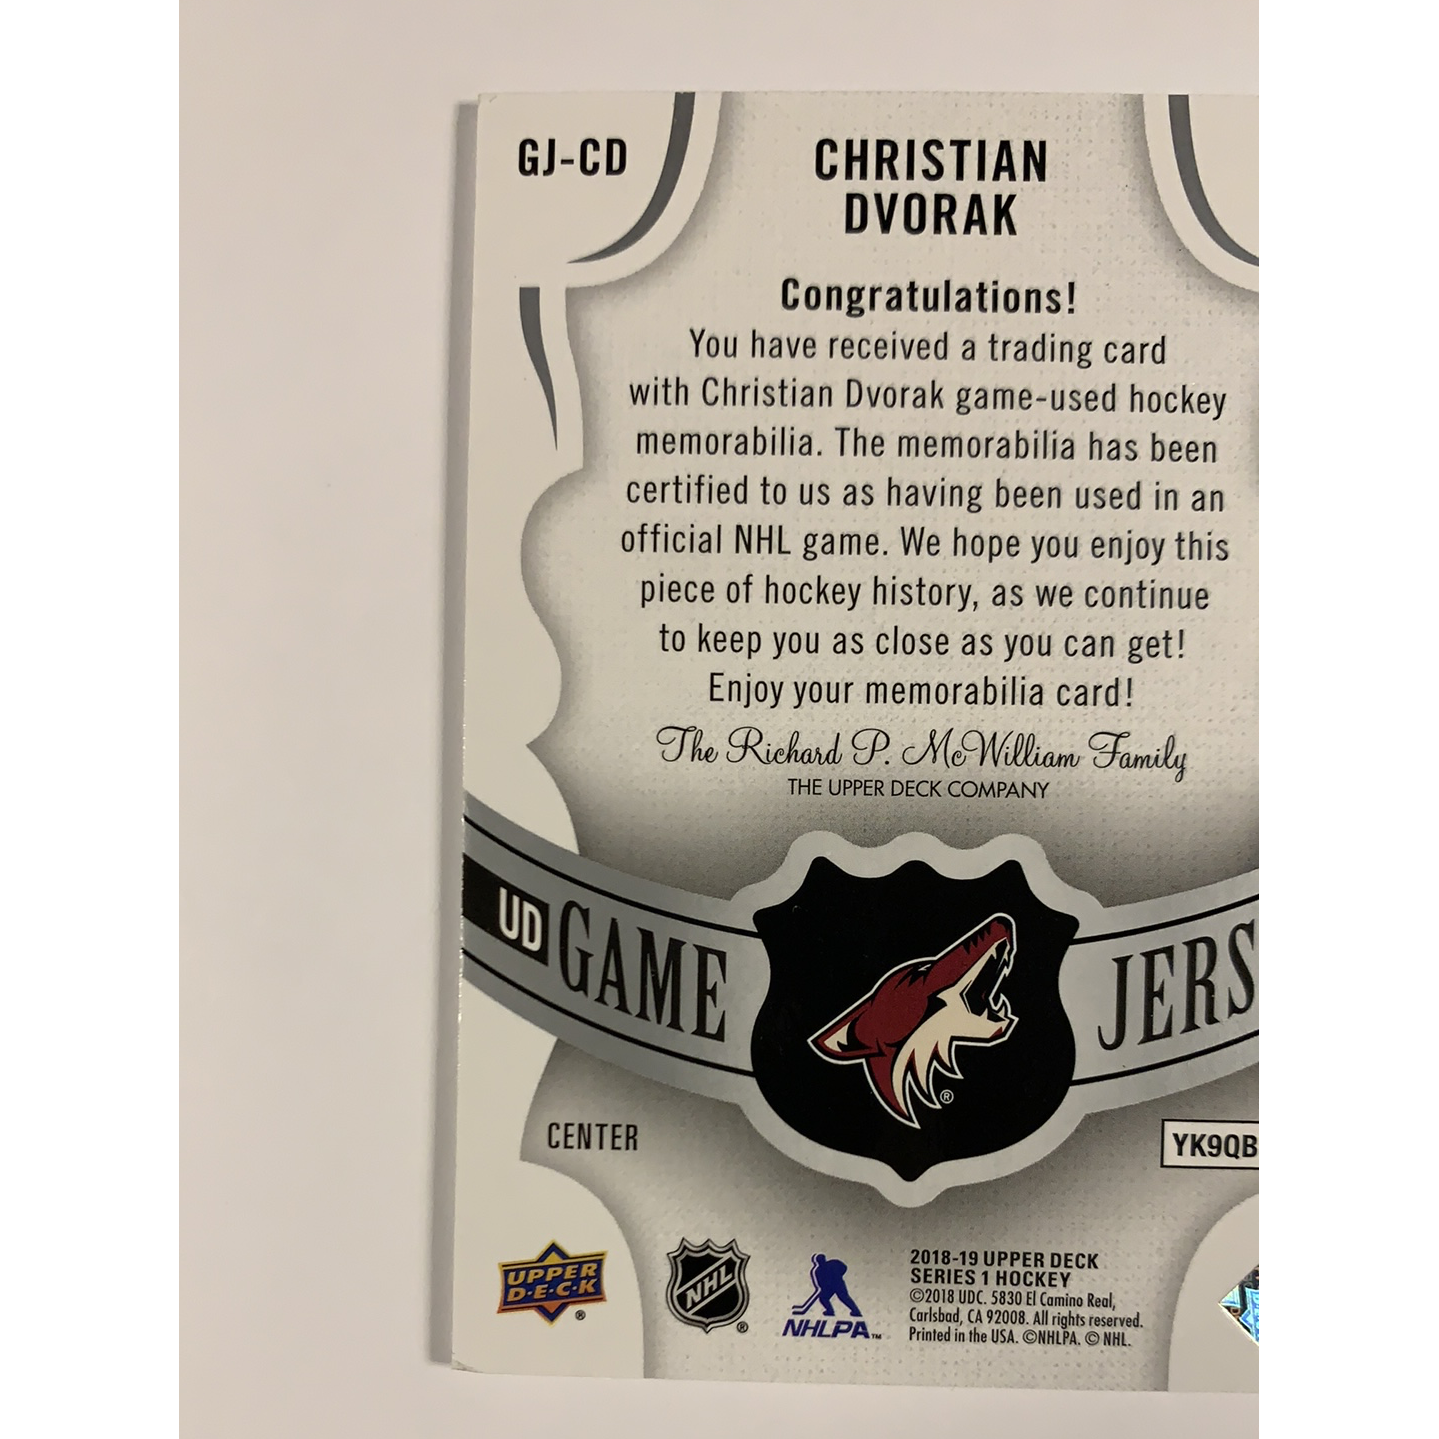  2018-19 Upper Deck Christian Dvorak Game Jersey  Local Legends Cards & Collectibles